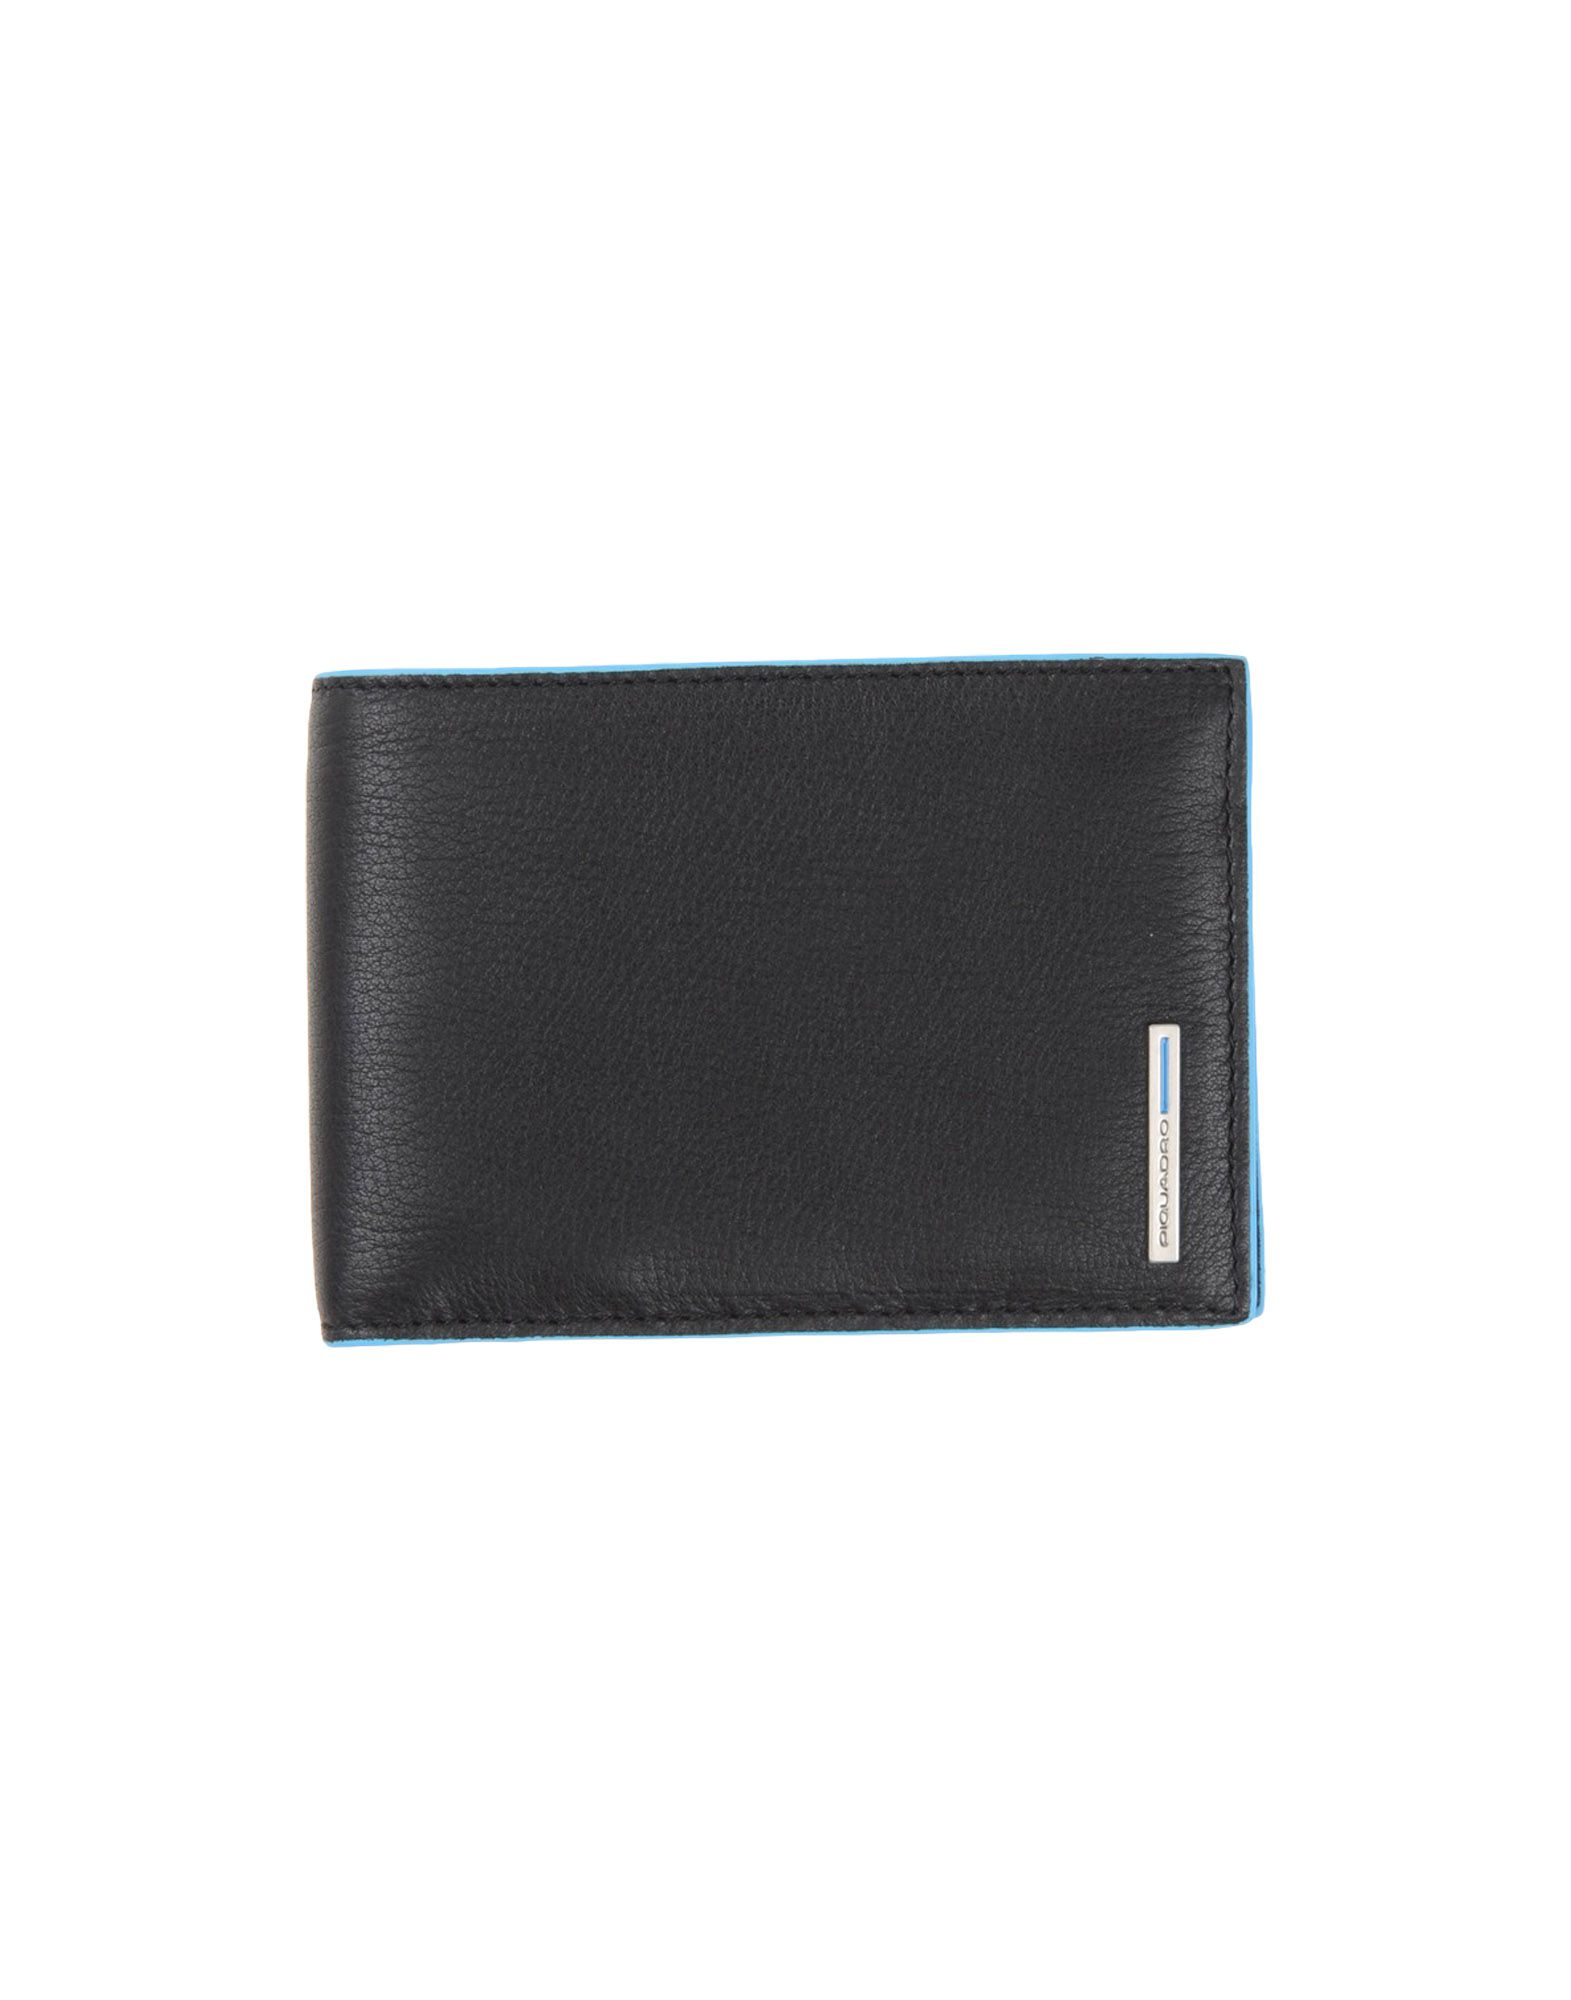 Piquadro Wallet in Black for Men | Lyst